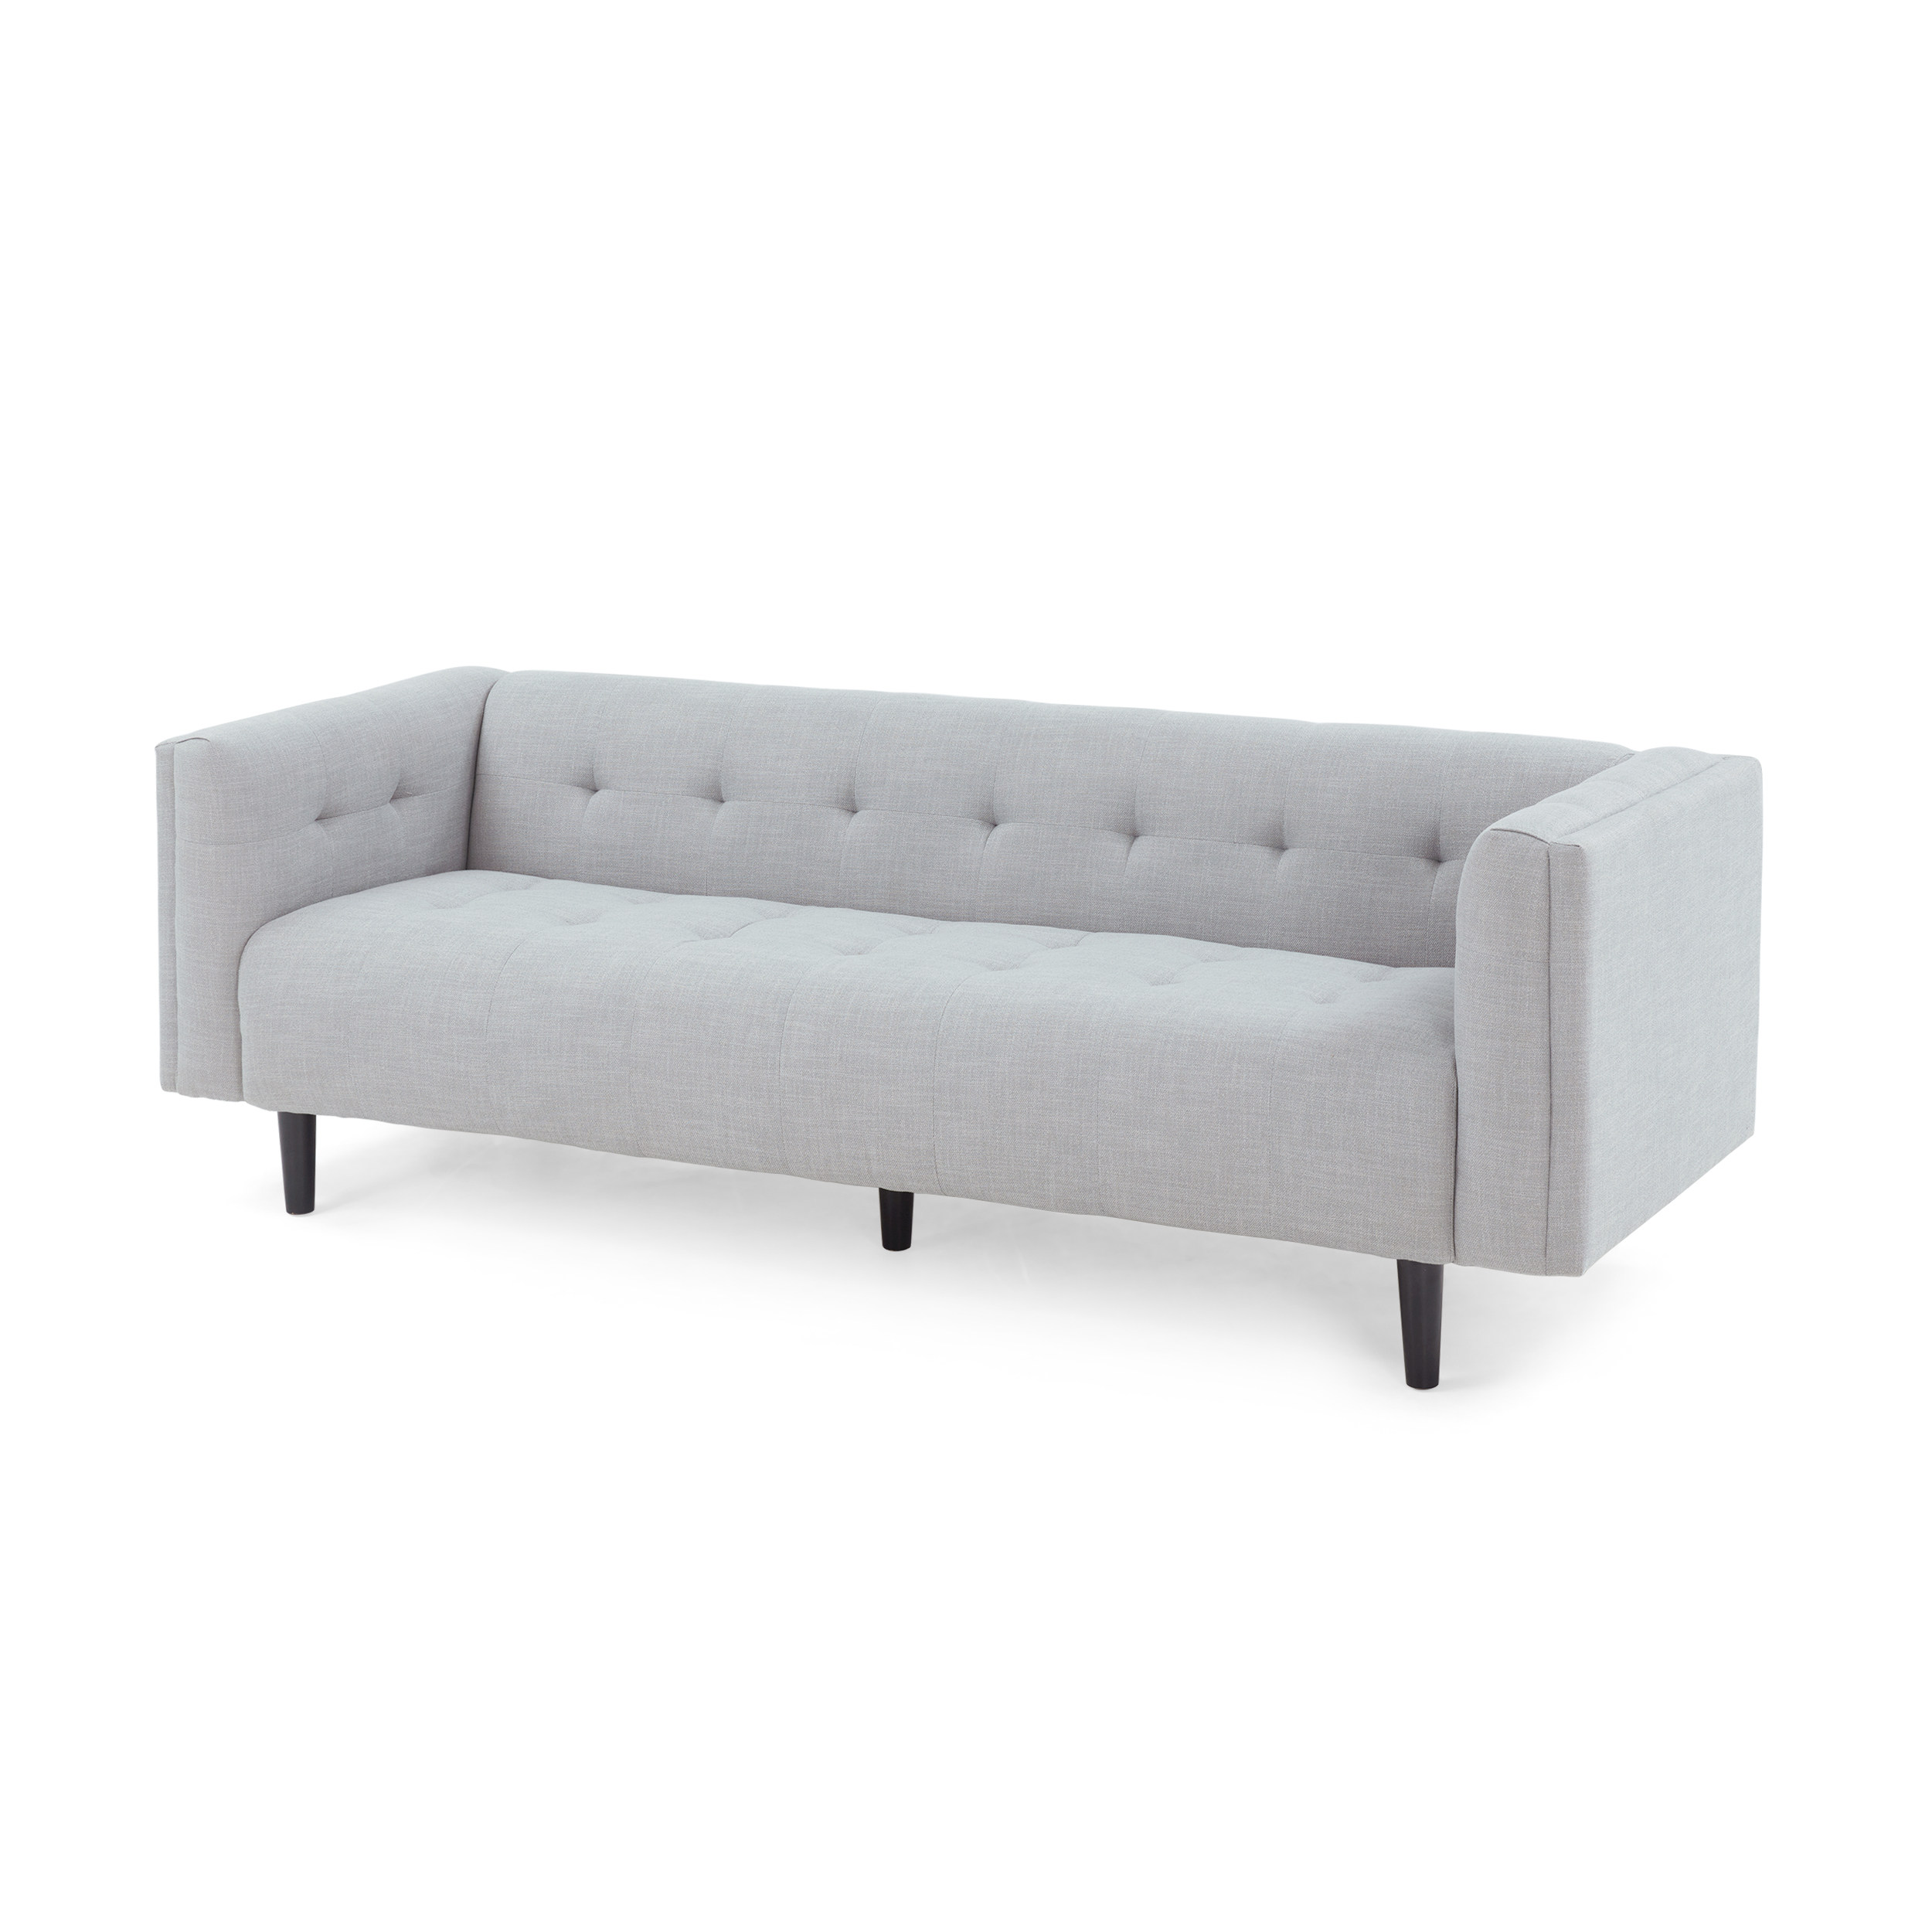 Lagom Fabric Upholstered Sofa, Light Gray, Dark Brown - image 4 of 9